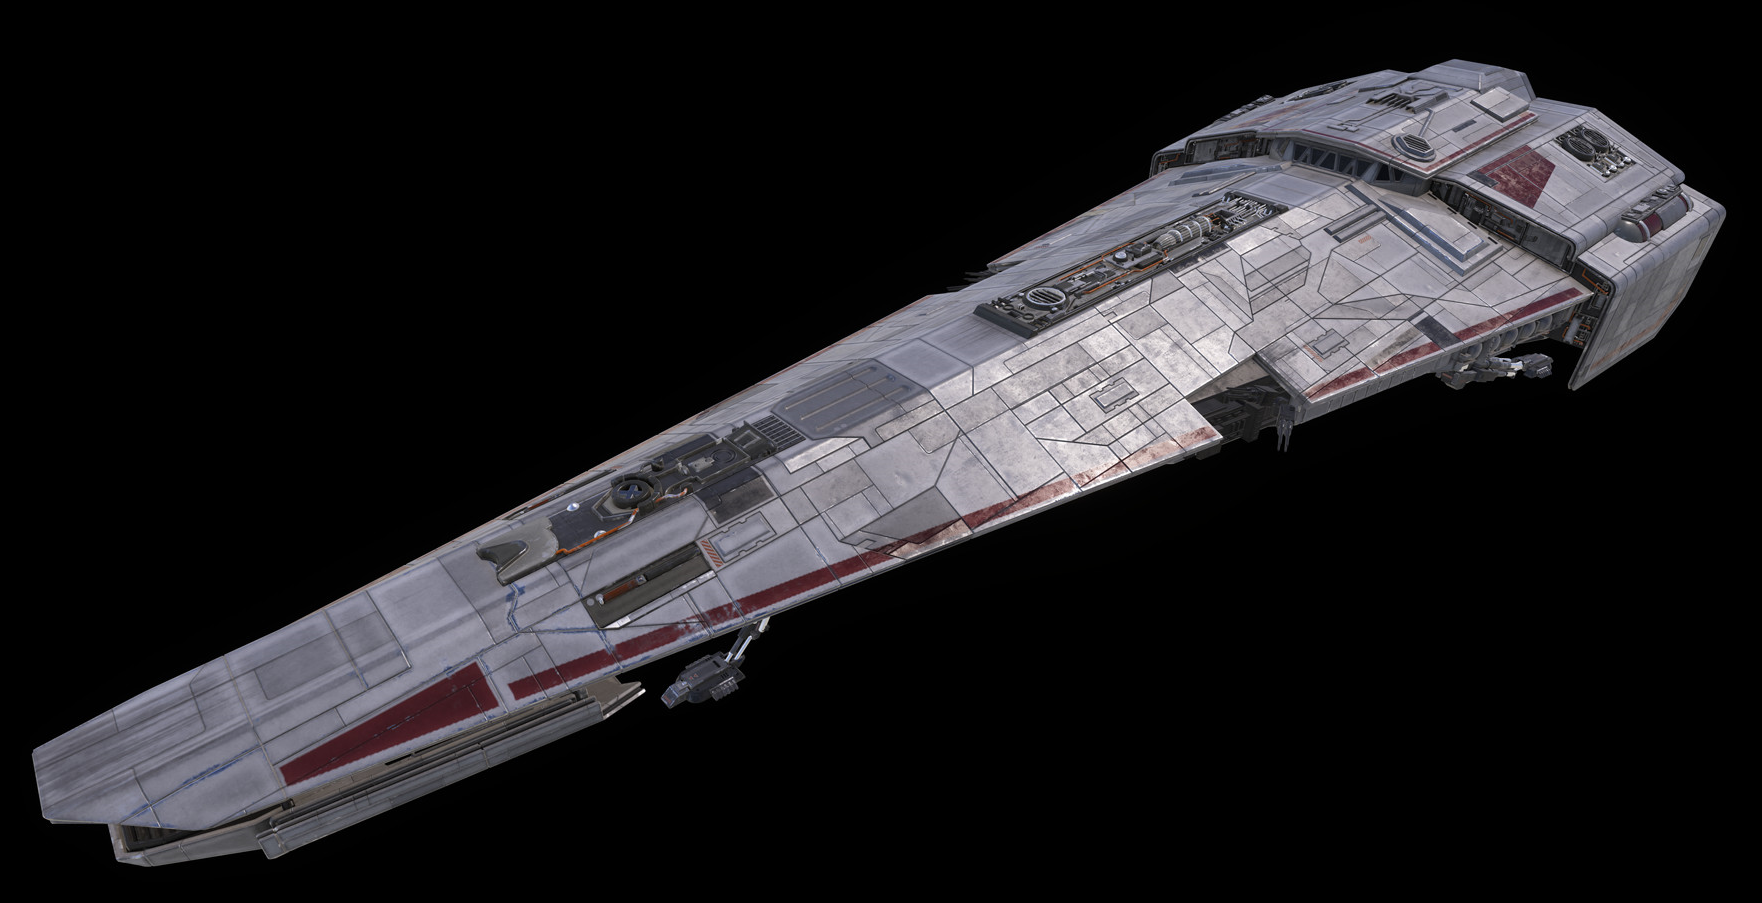 Corvus Ship Star Wars | vlr.eng.br